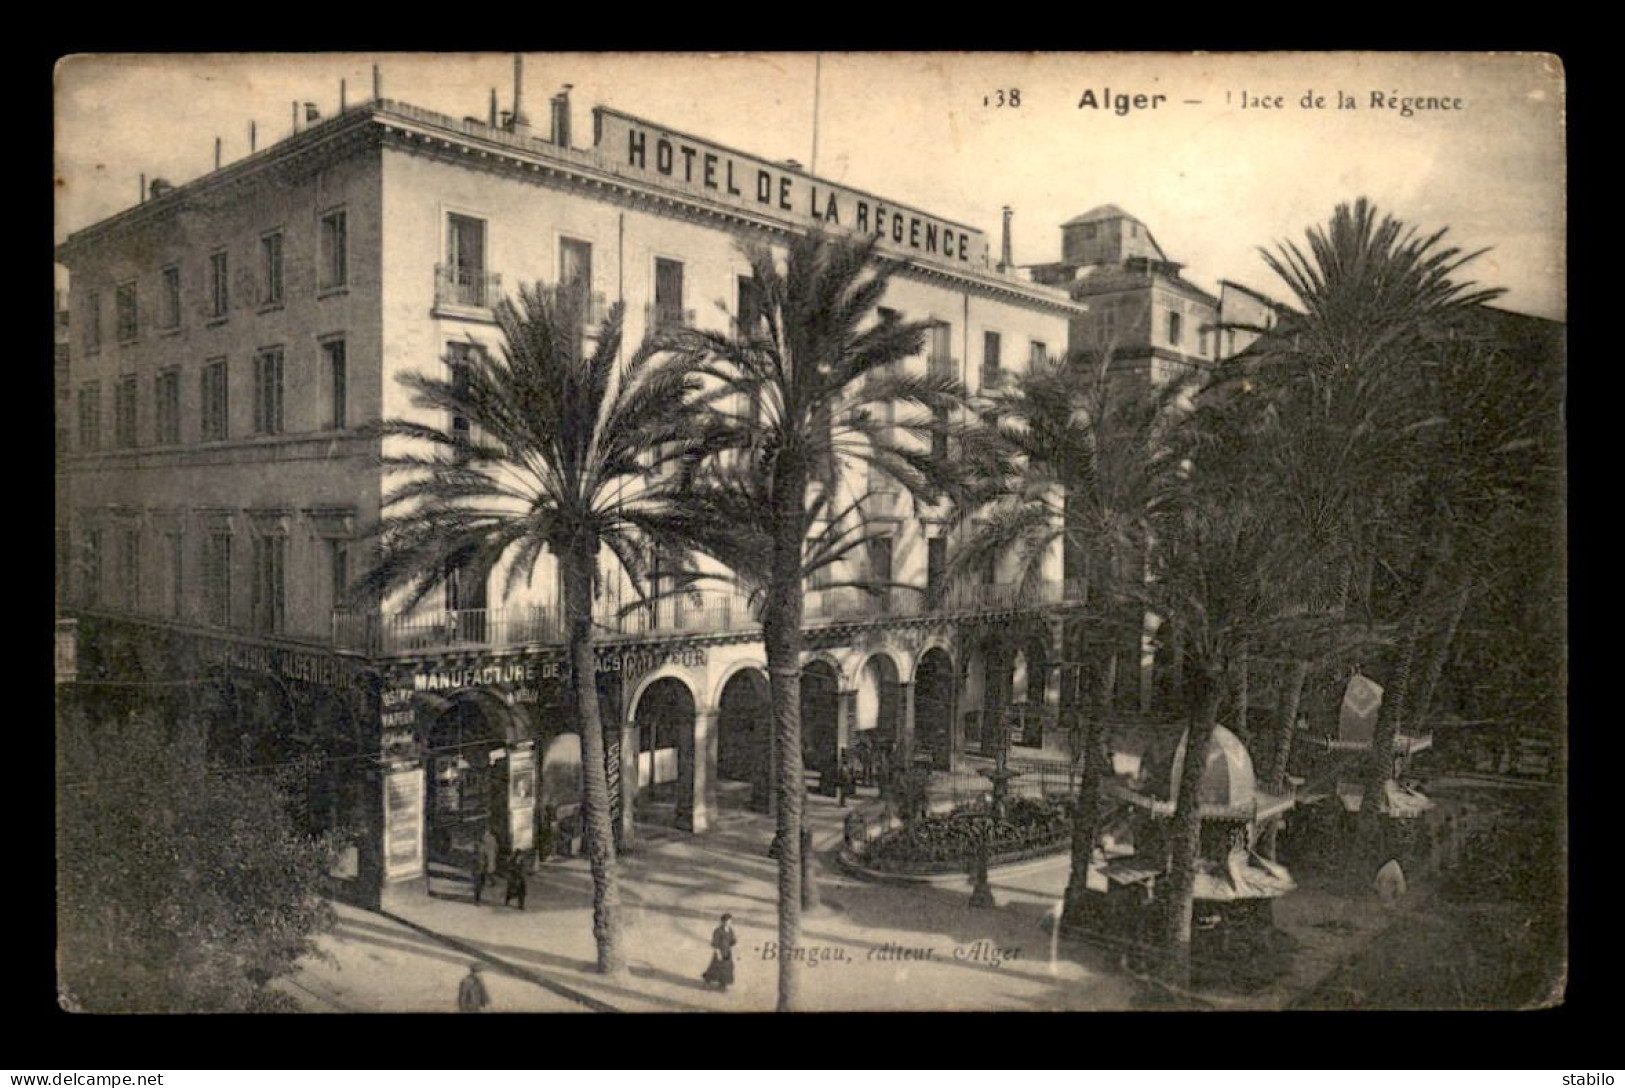 ALGERIE - ALGER - PLACE DE LA REGENCE - HOTEL DE LA REGENCE - TABAC M. MELIA - Algiers